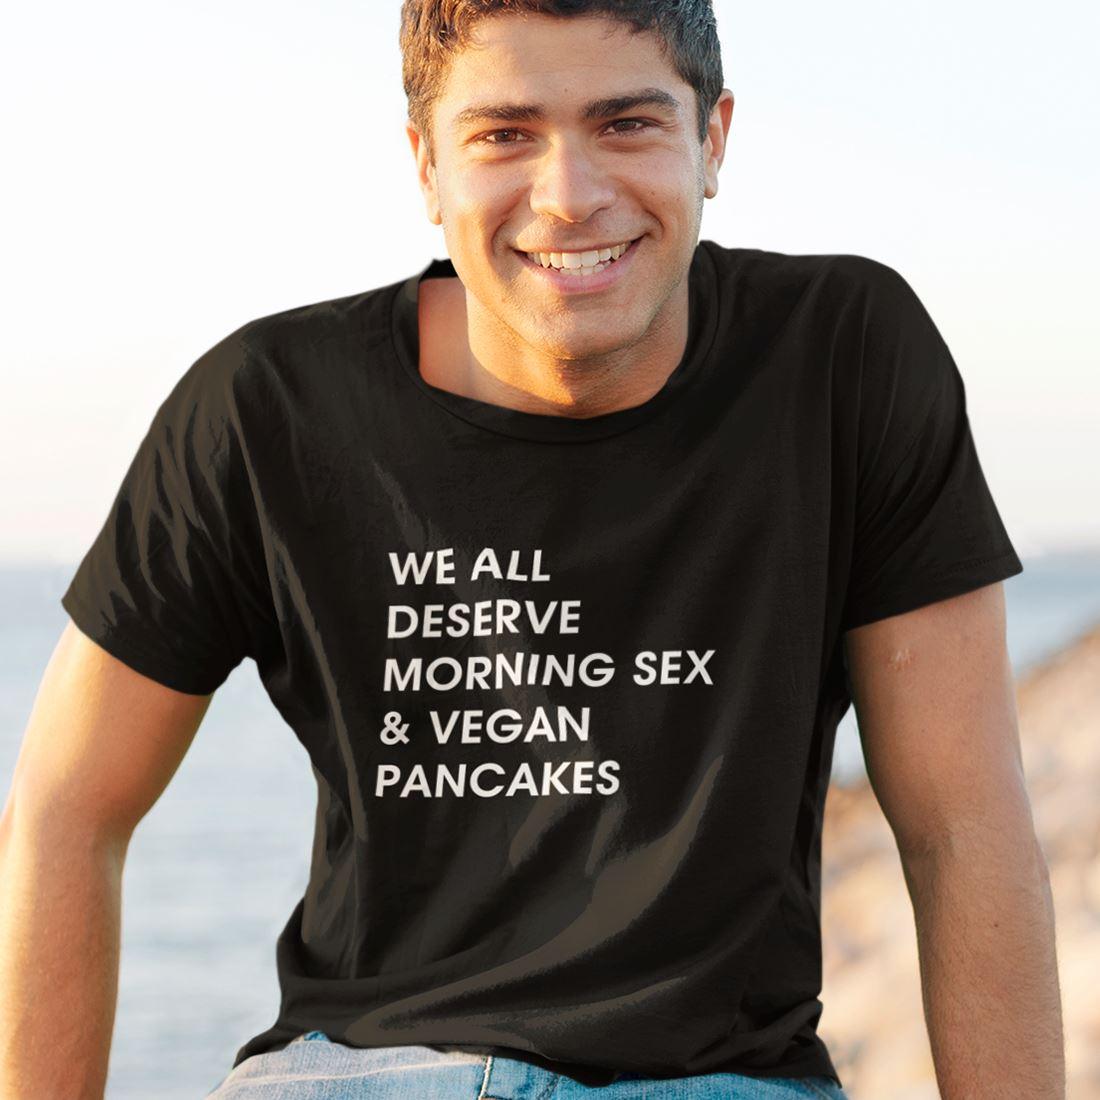 We all deserve morning sex & vegan pancakes - Unisex Organic Shirt Rocker T-Shirt ST/ST Shirtee 